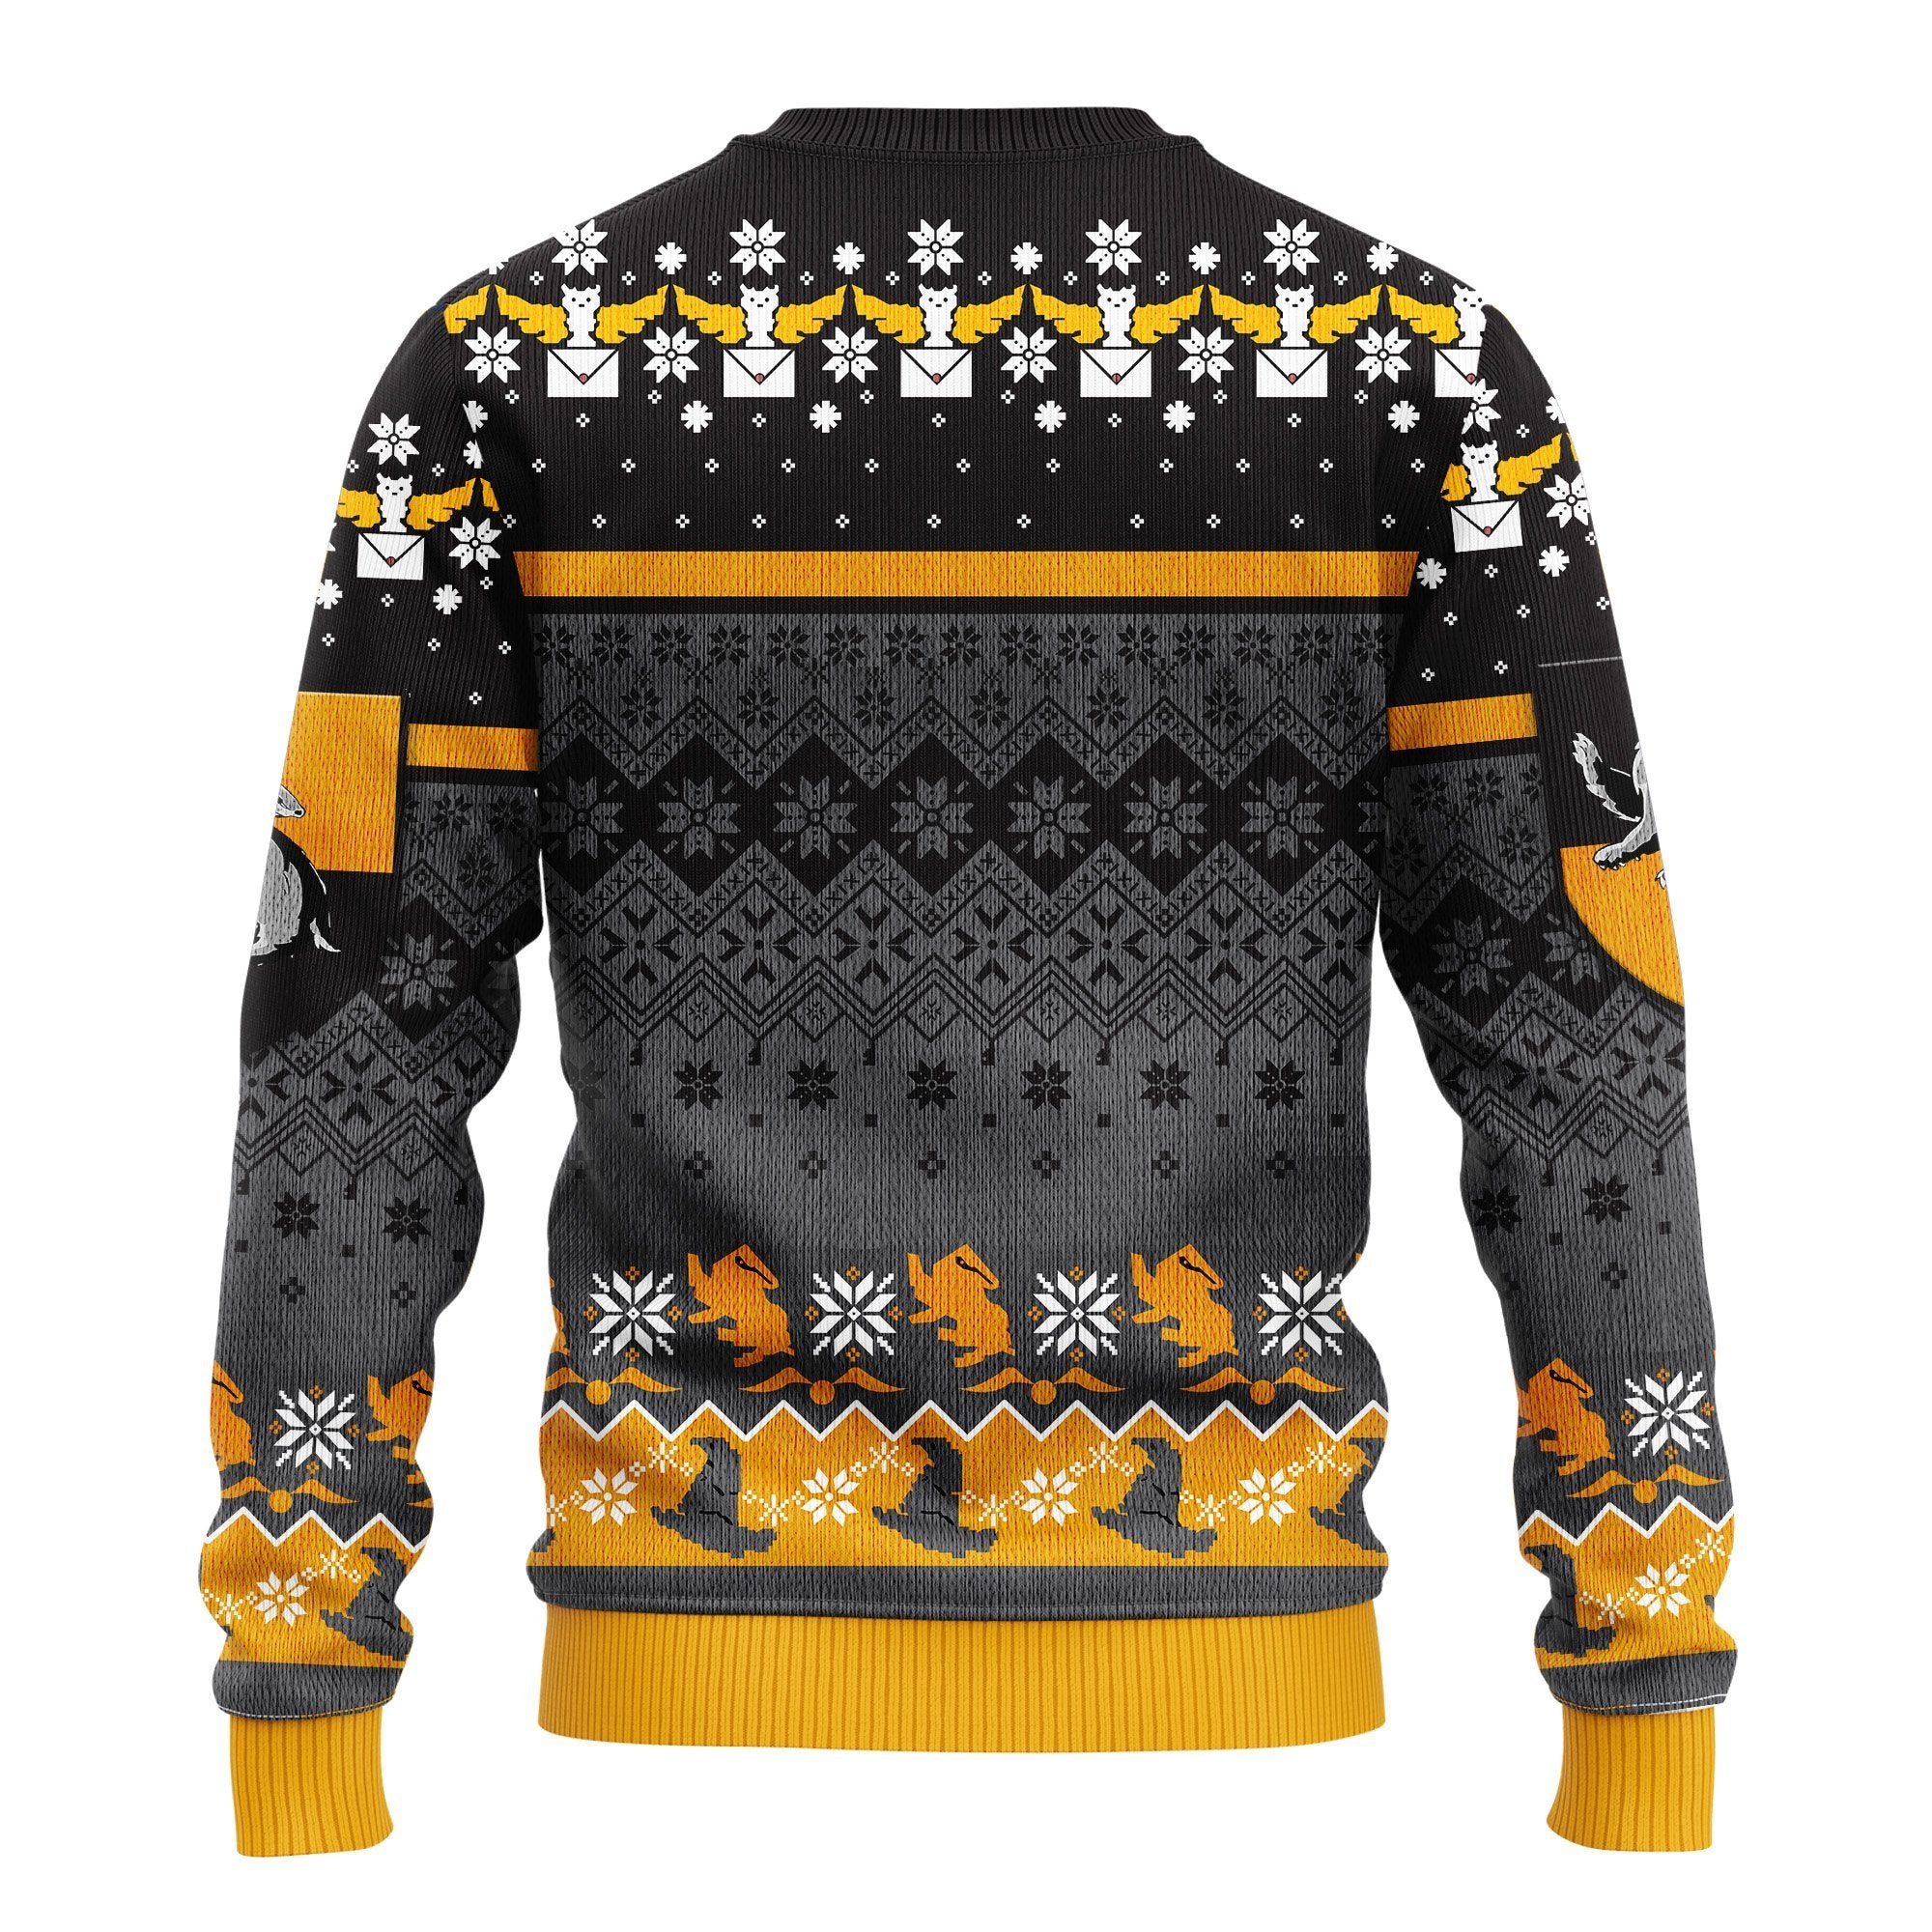 Harry Potter Hufflepuff Ugly Christmas Sweater Amazing Gift Idea Thanksgiving Gift